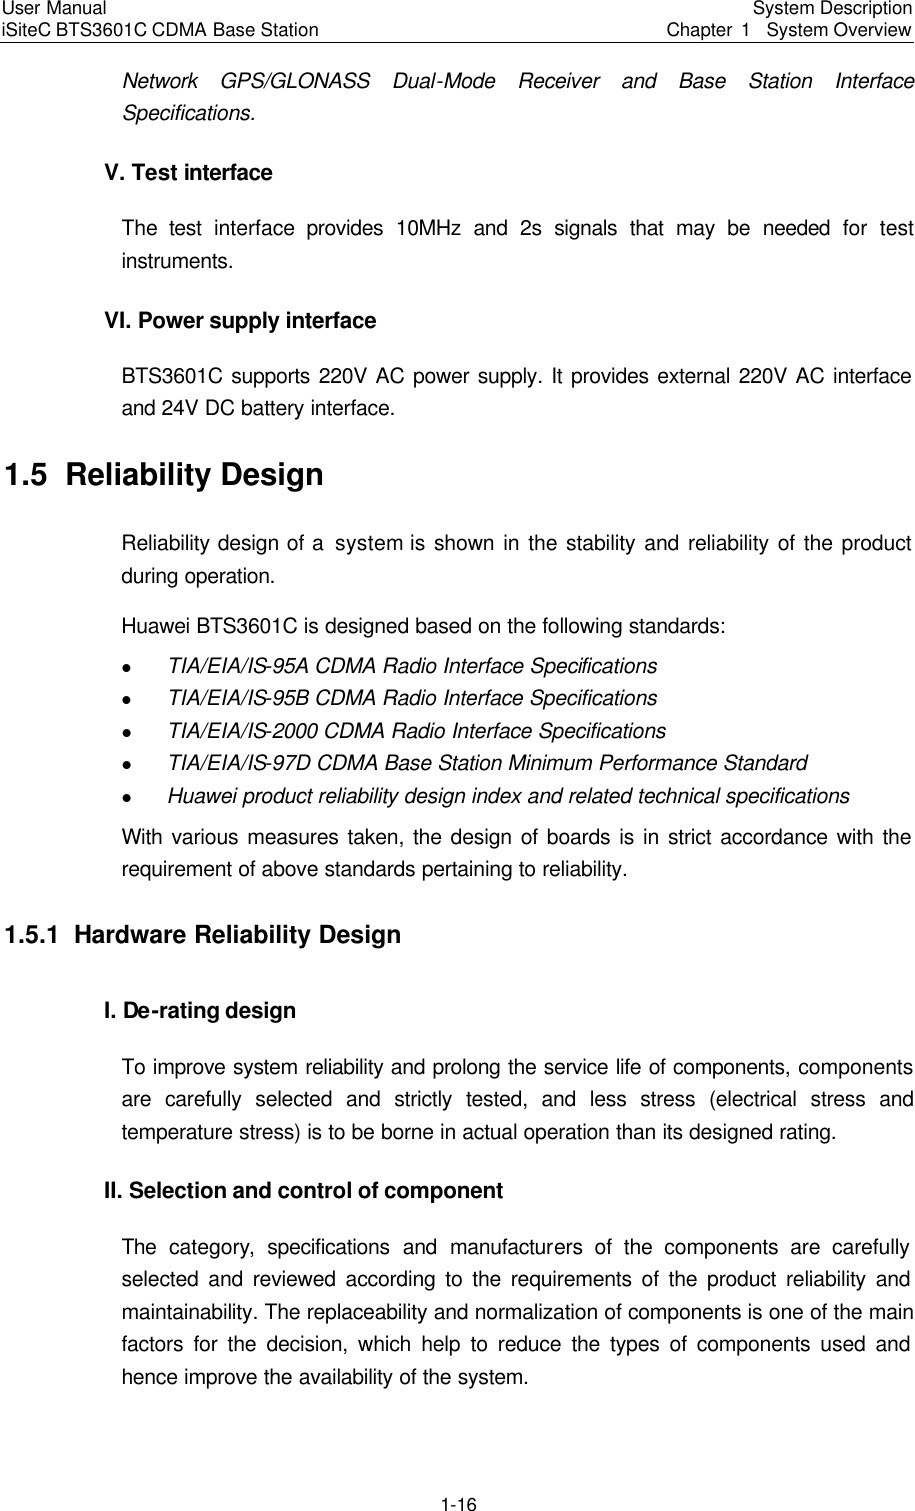 Page 19 of Huawei Technologies BTS3601C-800 CDMA Base Station User Manual 3